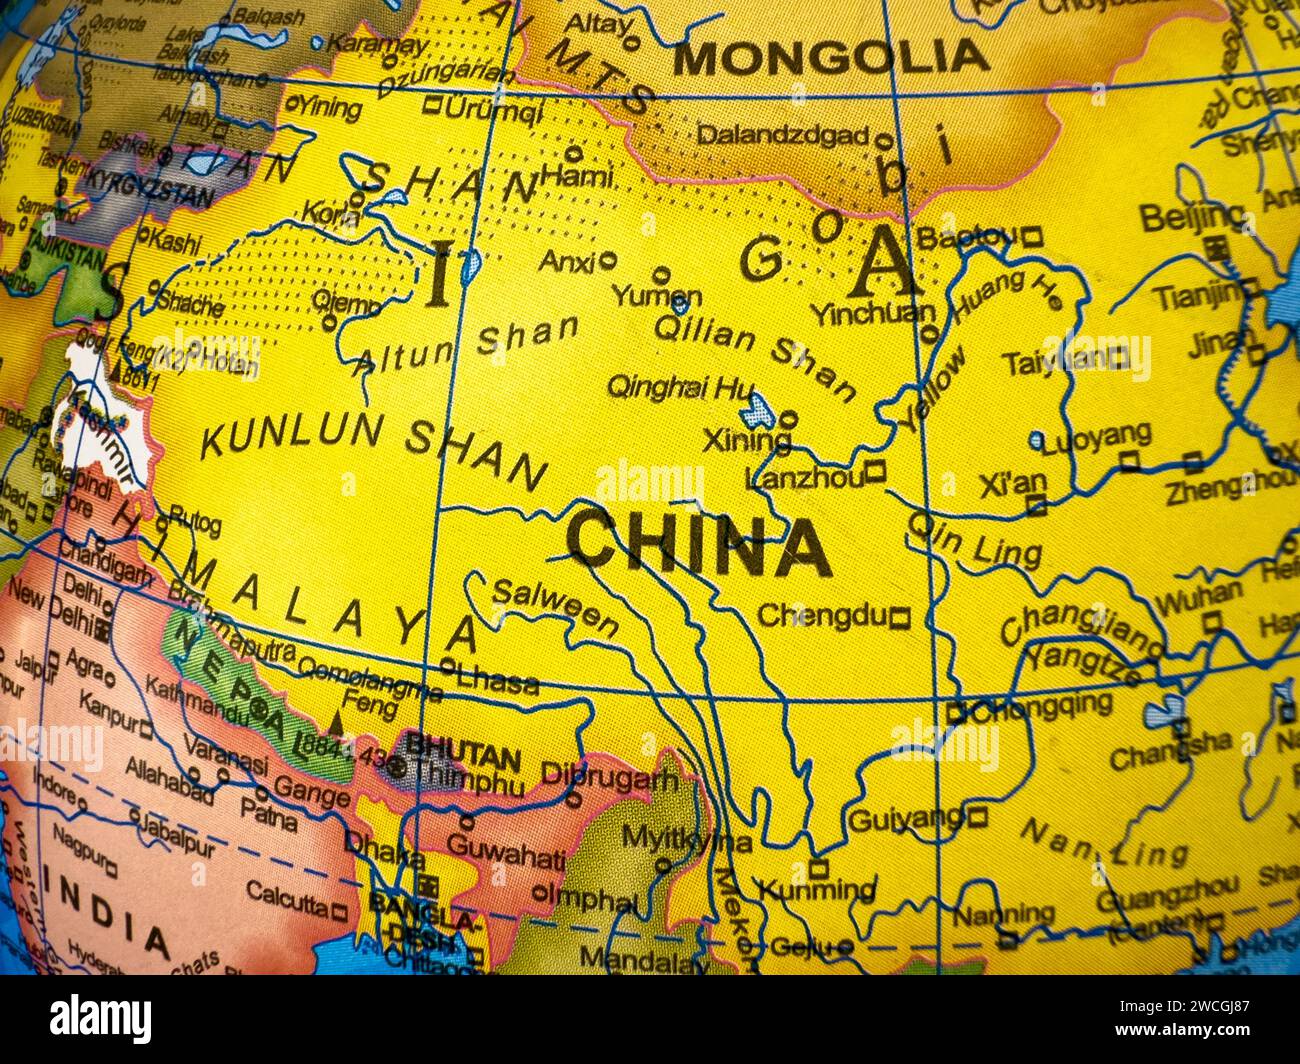 Lage des Landes der volksrepublik China auf der Karte Makronaht Stockfoto